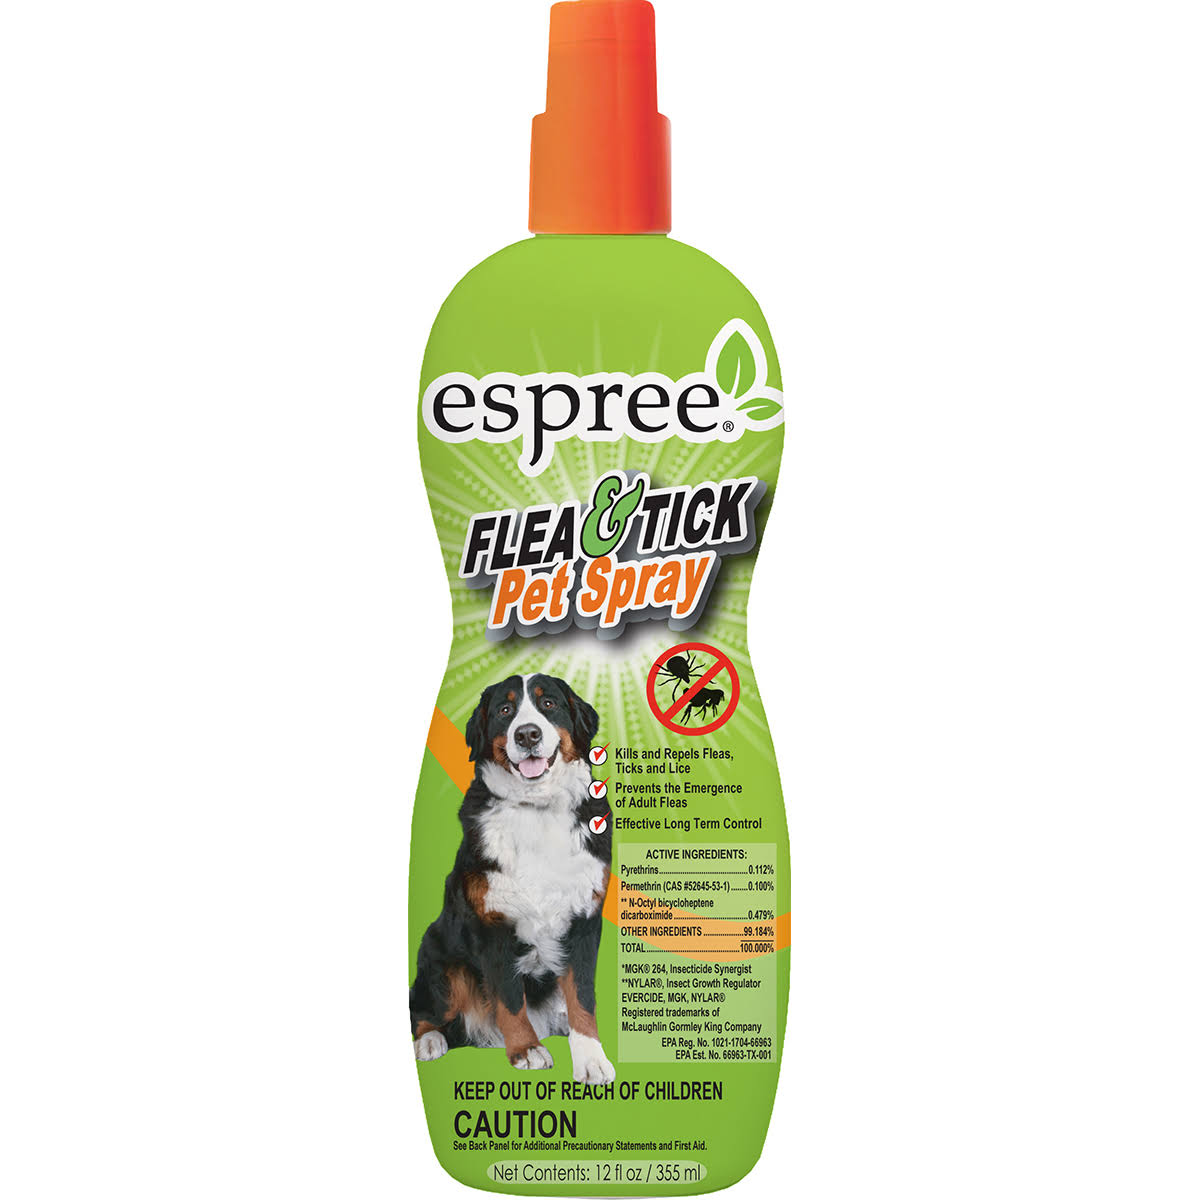 Espree Flea & Tick Pet Spray